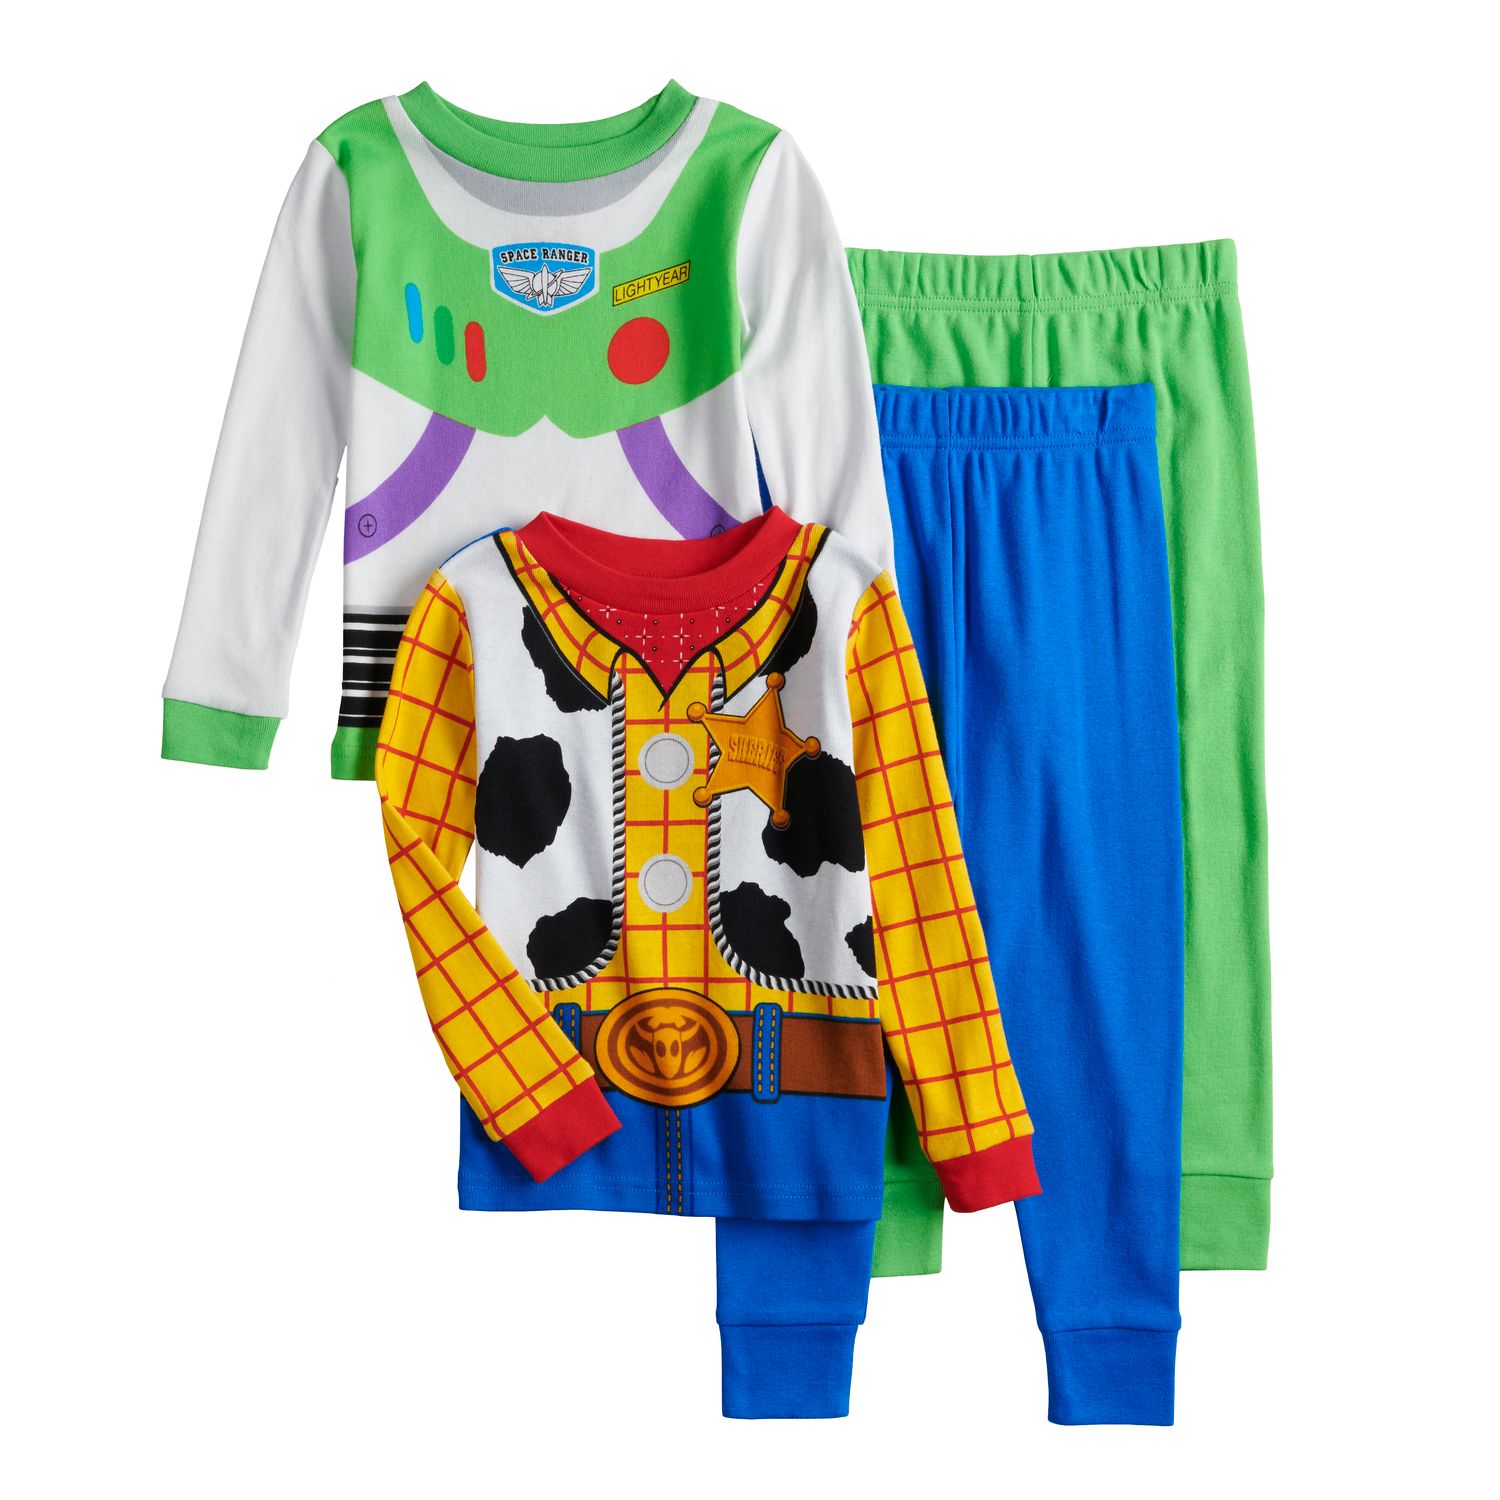 Image for Disney / Pixar Toy Story Toddler Boy 4-Piece Woody & Buzz Uniform Tops & Bottoms Pajama Set at Kohl's.